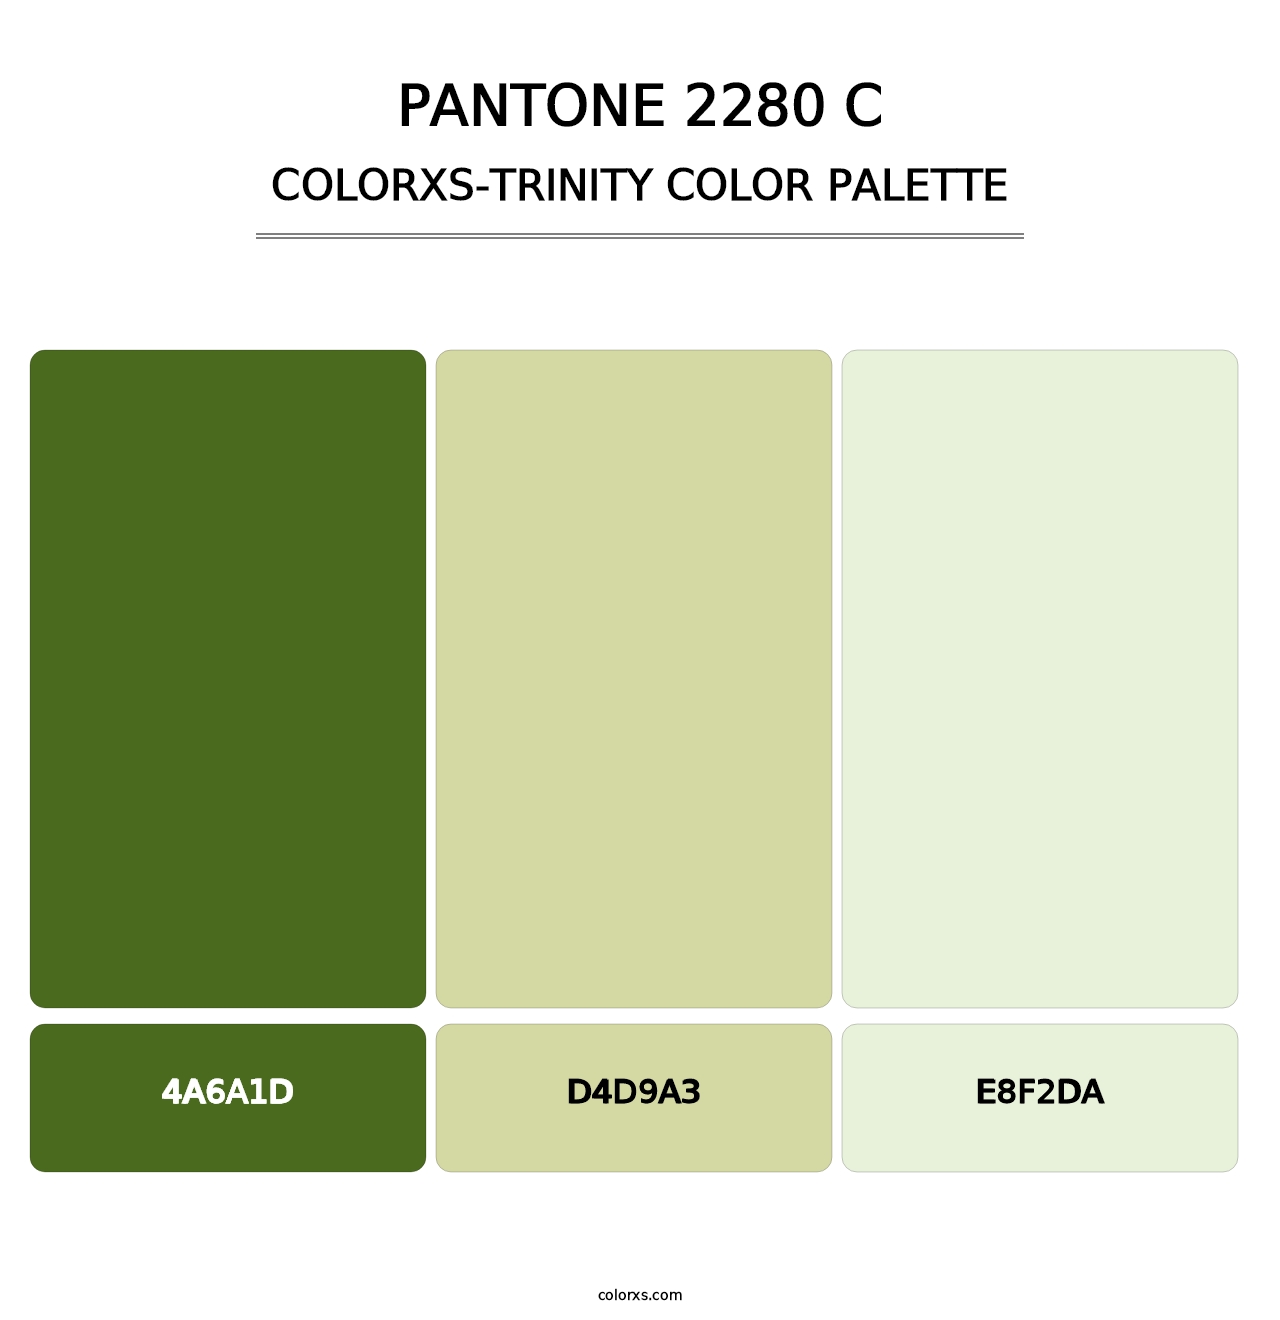 PANTONE 2280 C - Colorxs Trinity Palette